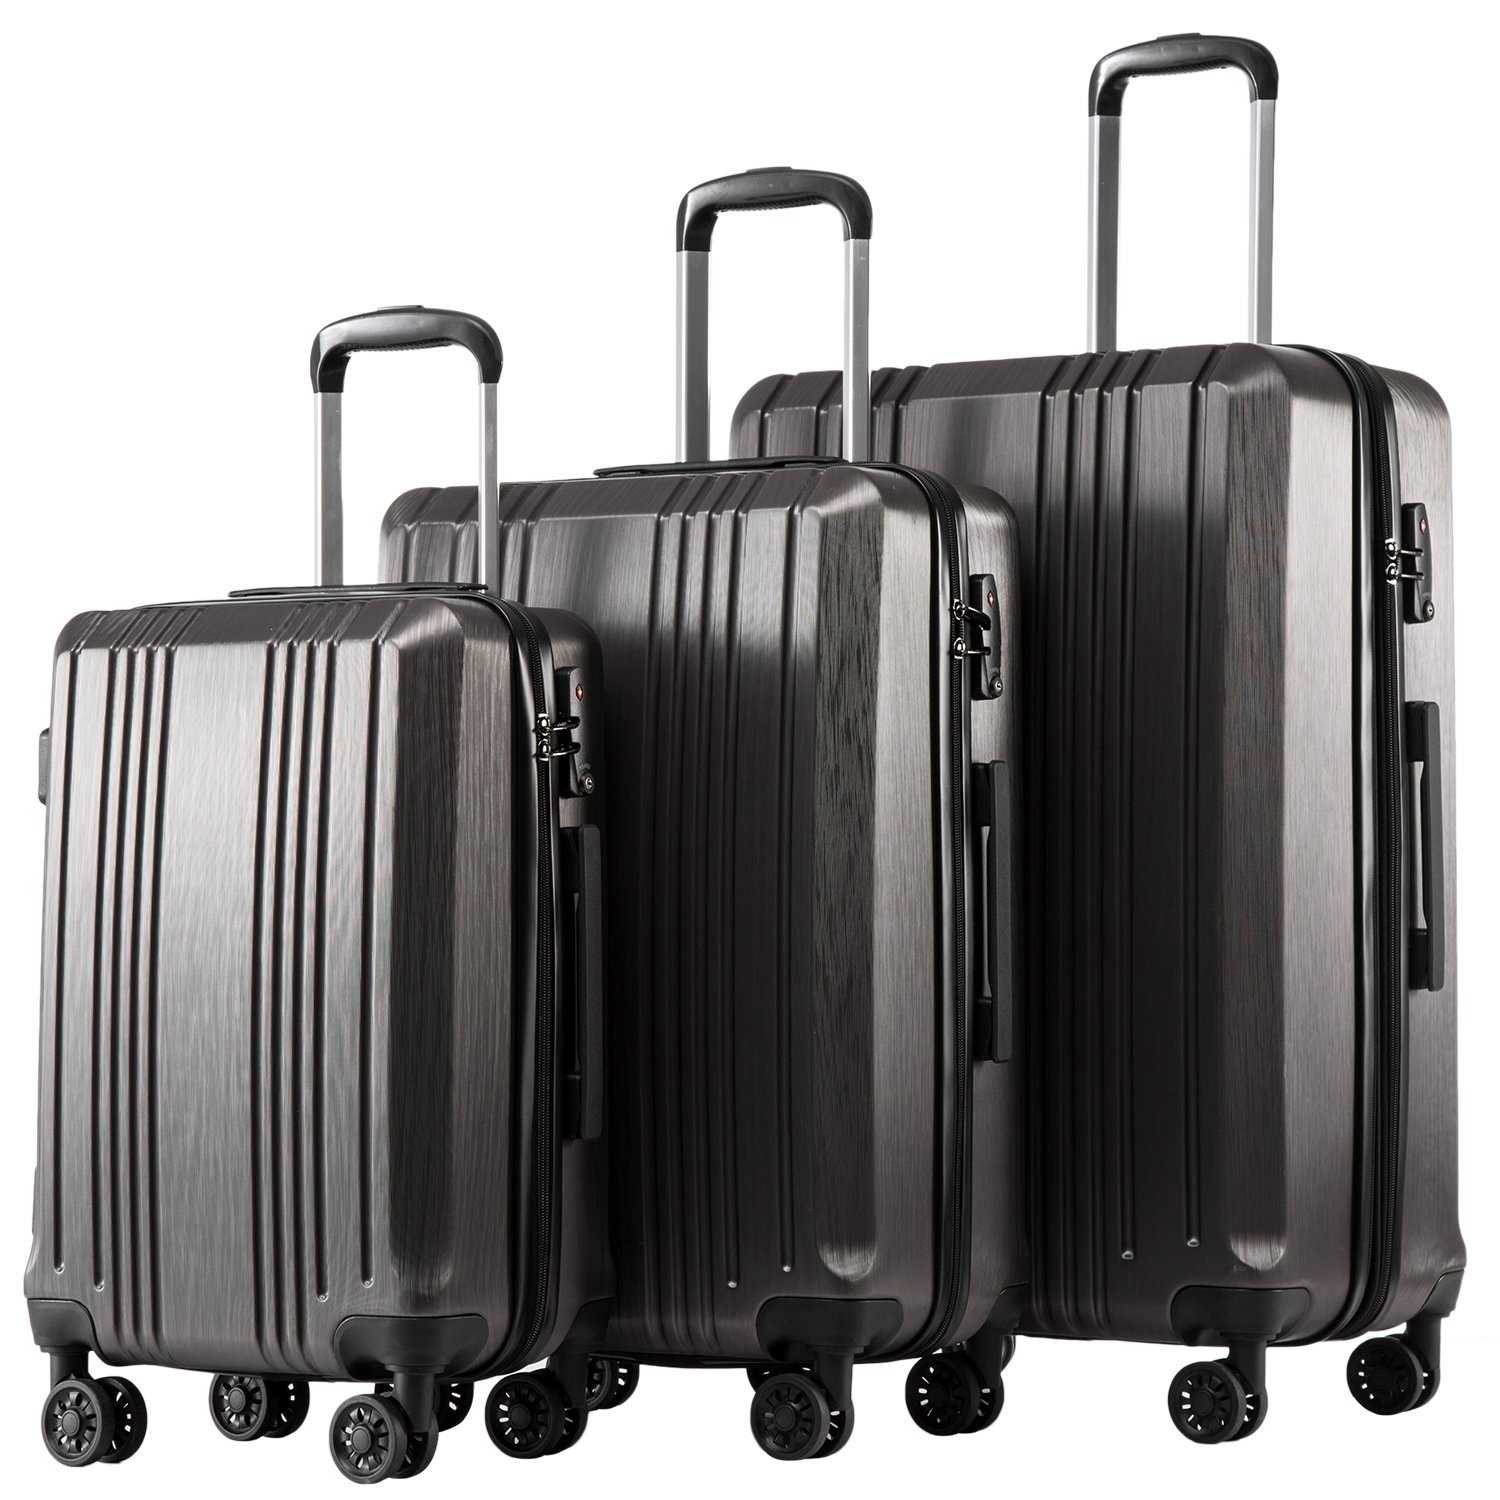 Coolife Expandable Suitcase, 3-Piece